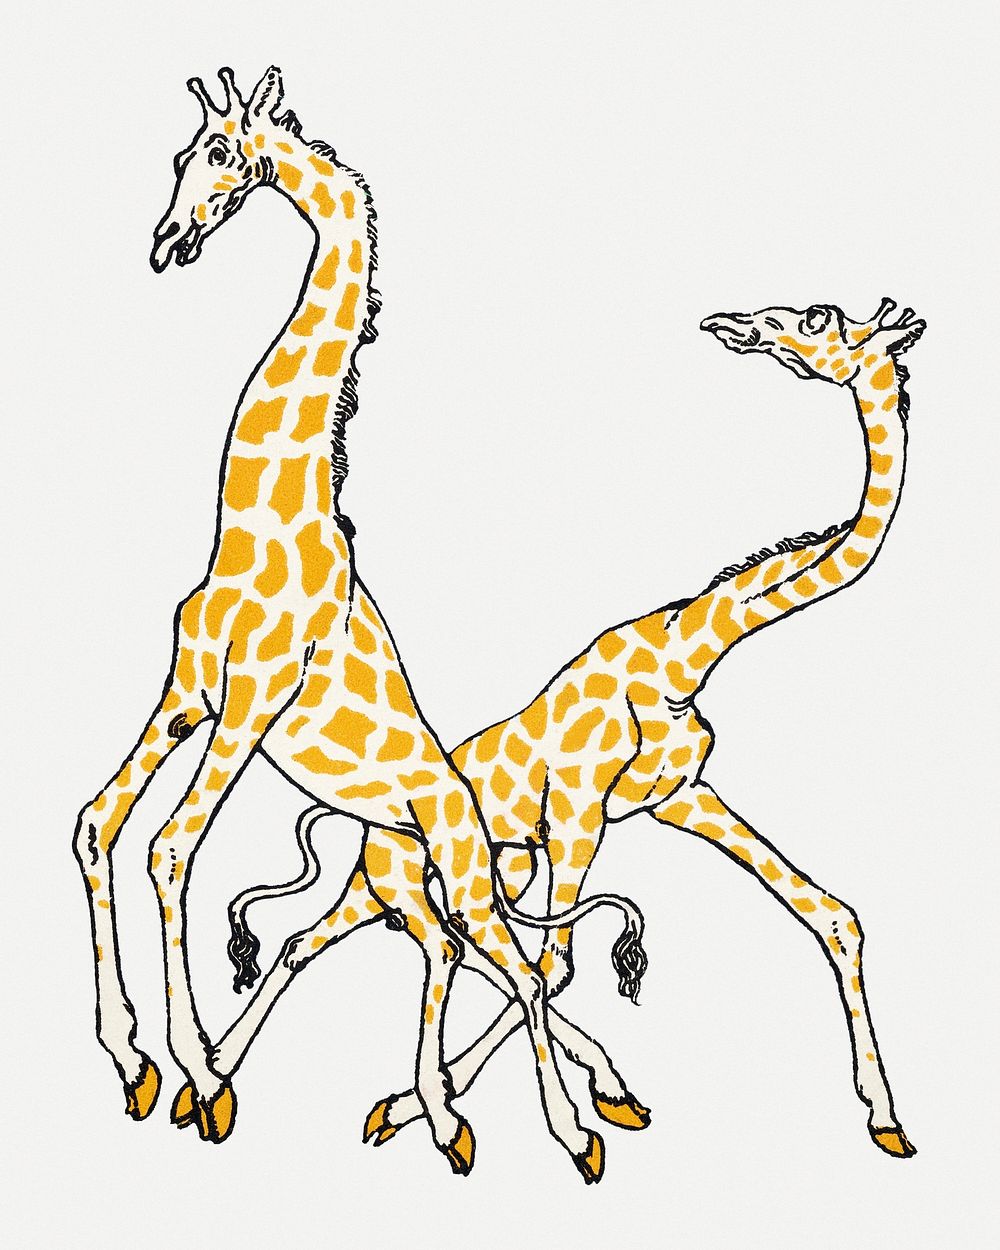 Vintage giraffes illustration, remixed from artworks by Moriz Jung